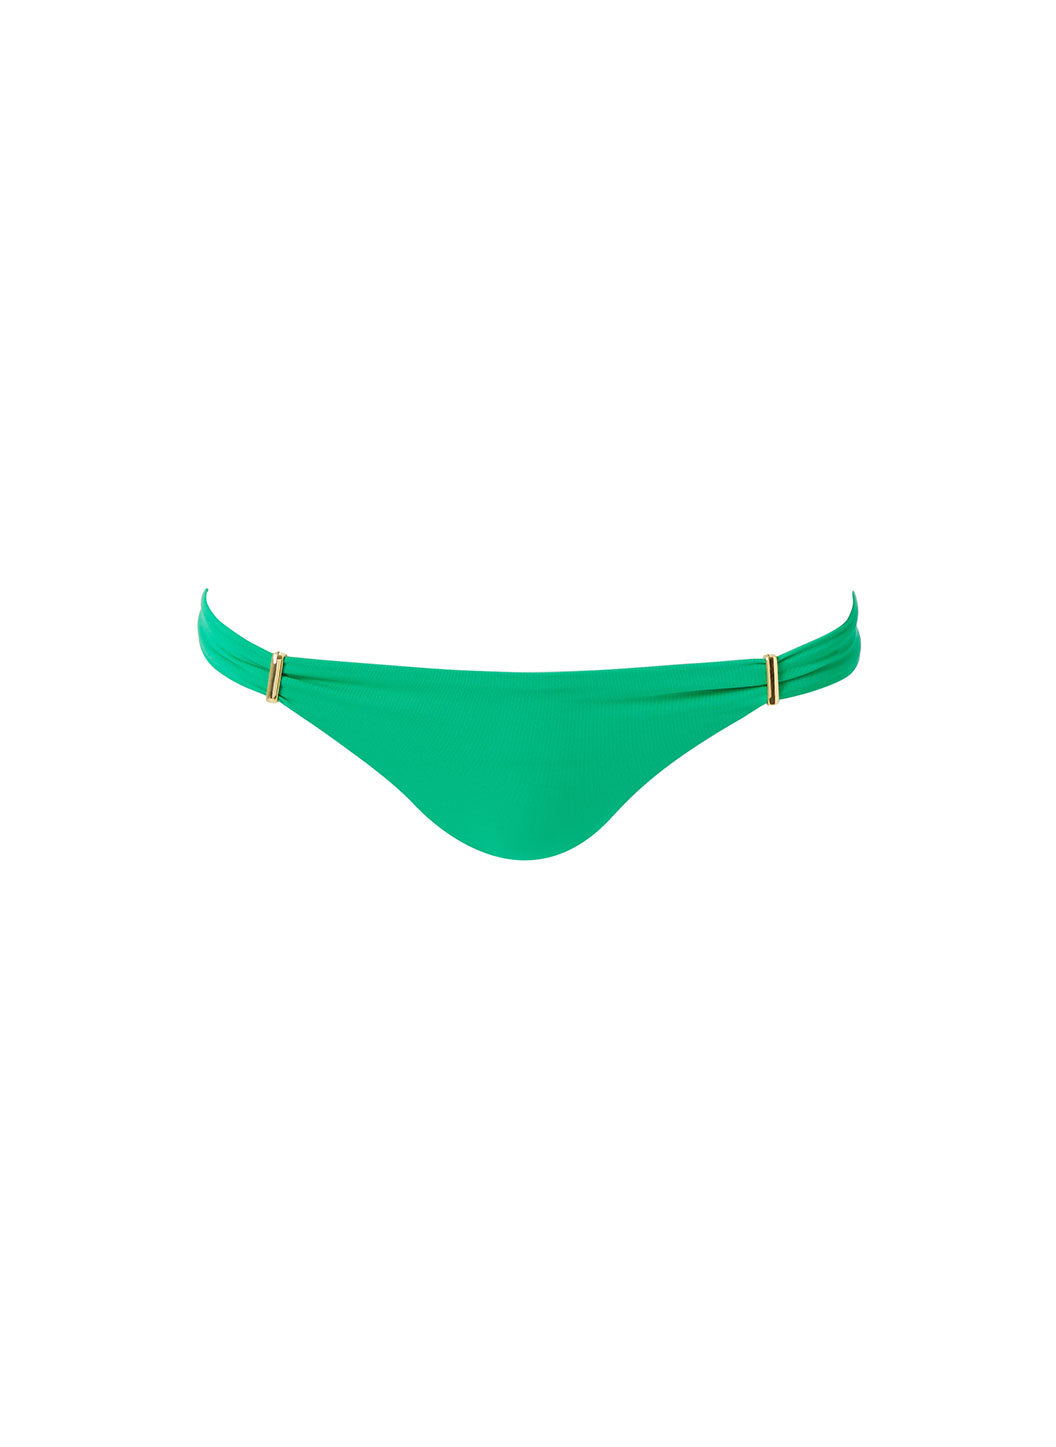 Martinique Green Bikini Bottom